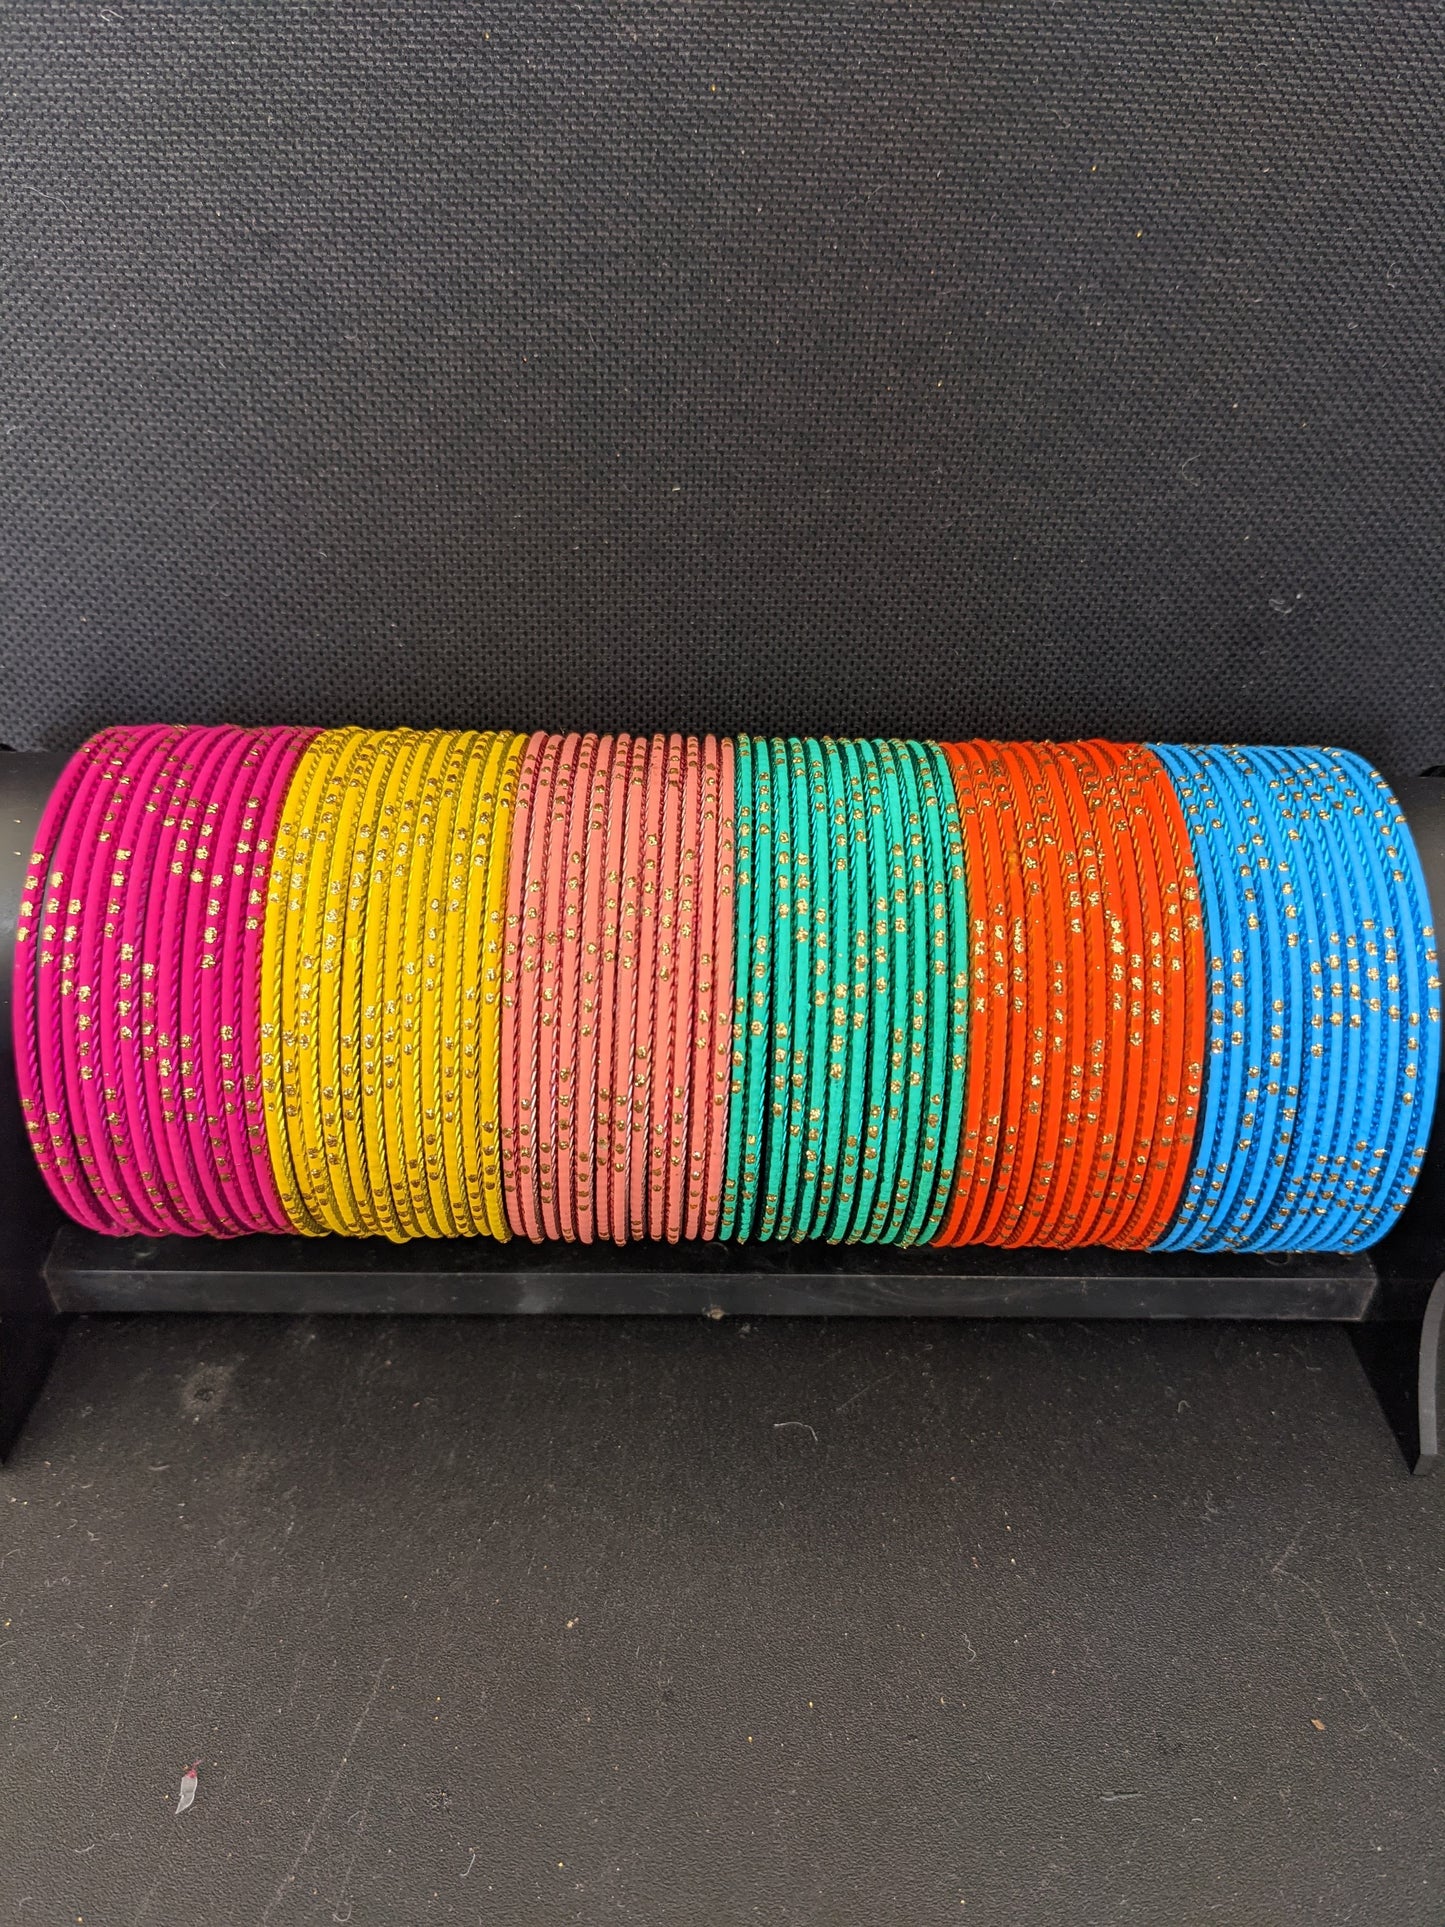 Design 3 / Big size bangles  / Colorful Thin Metal Bangles - 1 dozen - 2x10 2x12